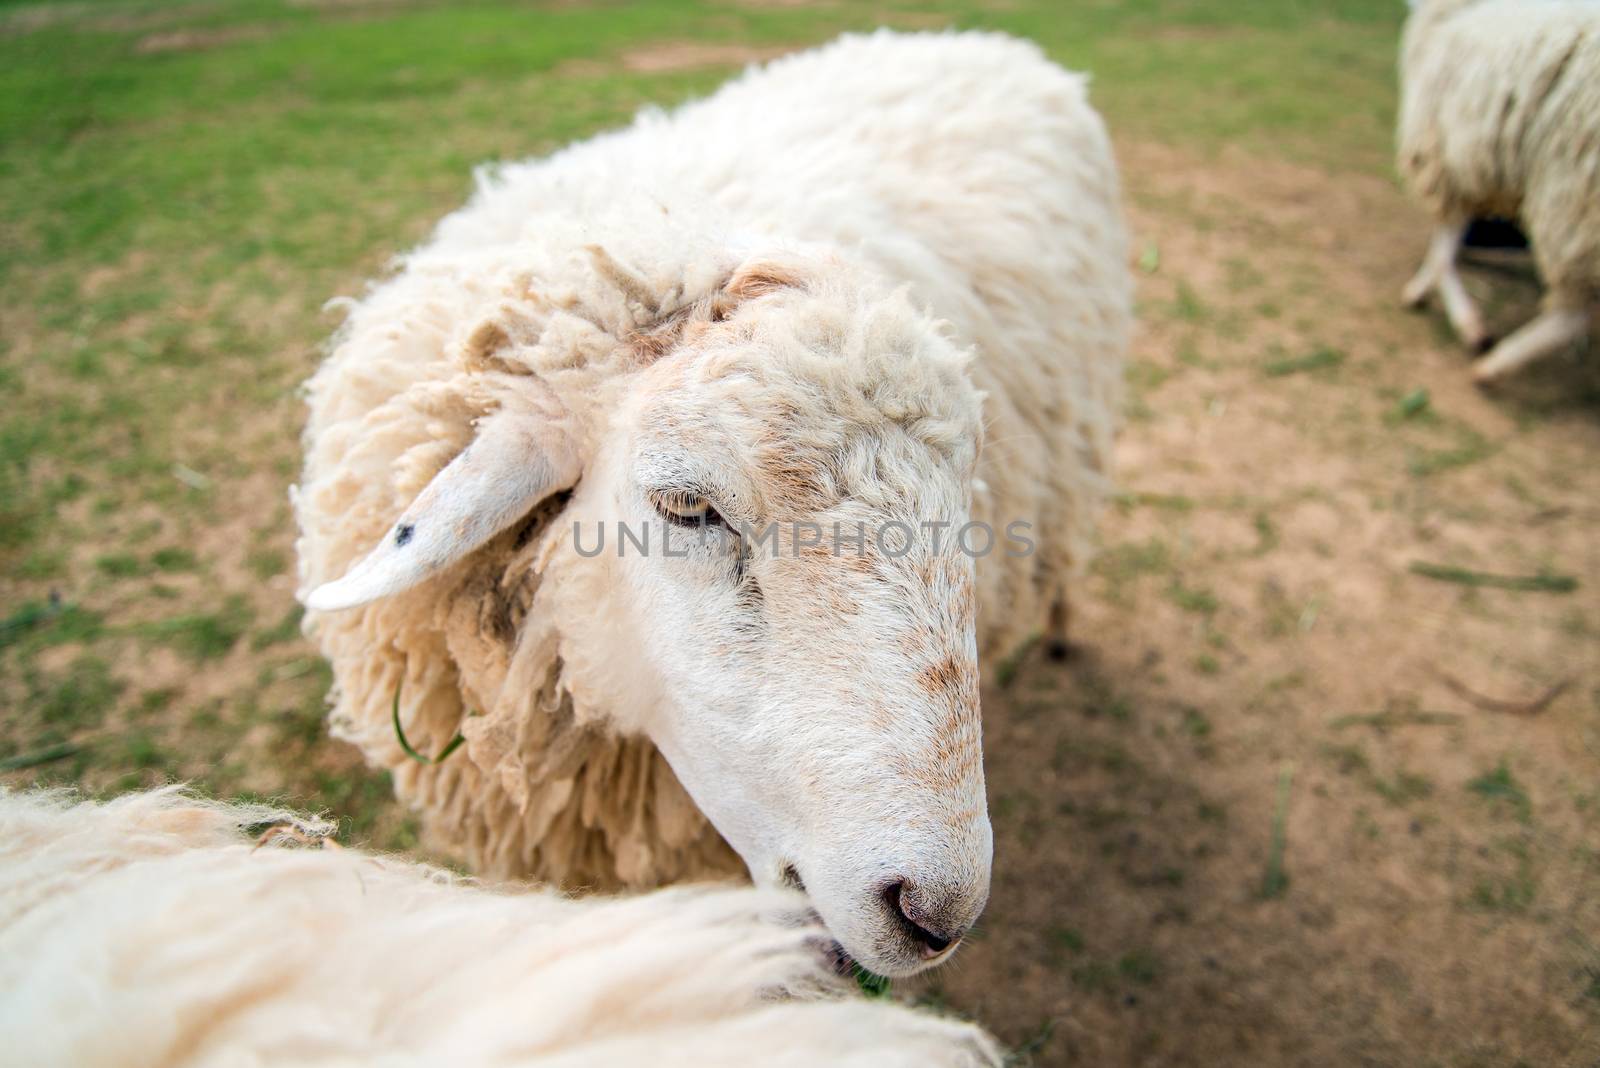 White Woolly Sheep in a Green Field by jakgree